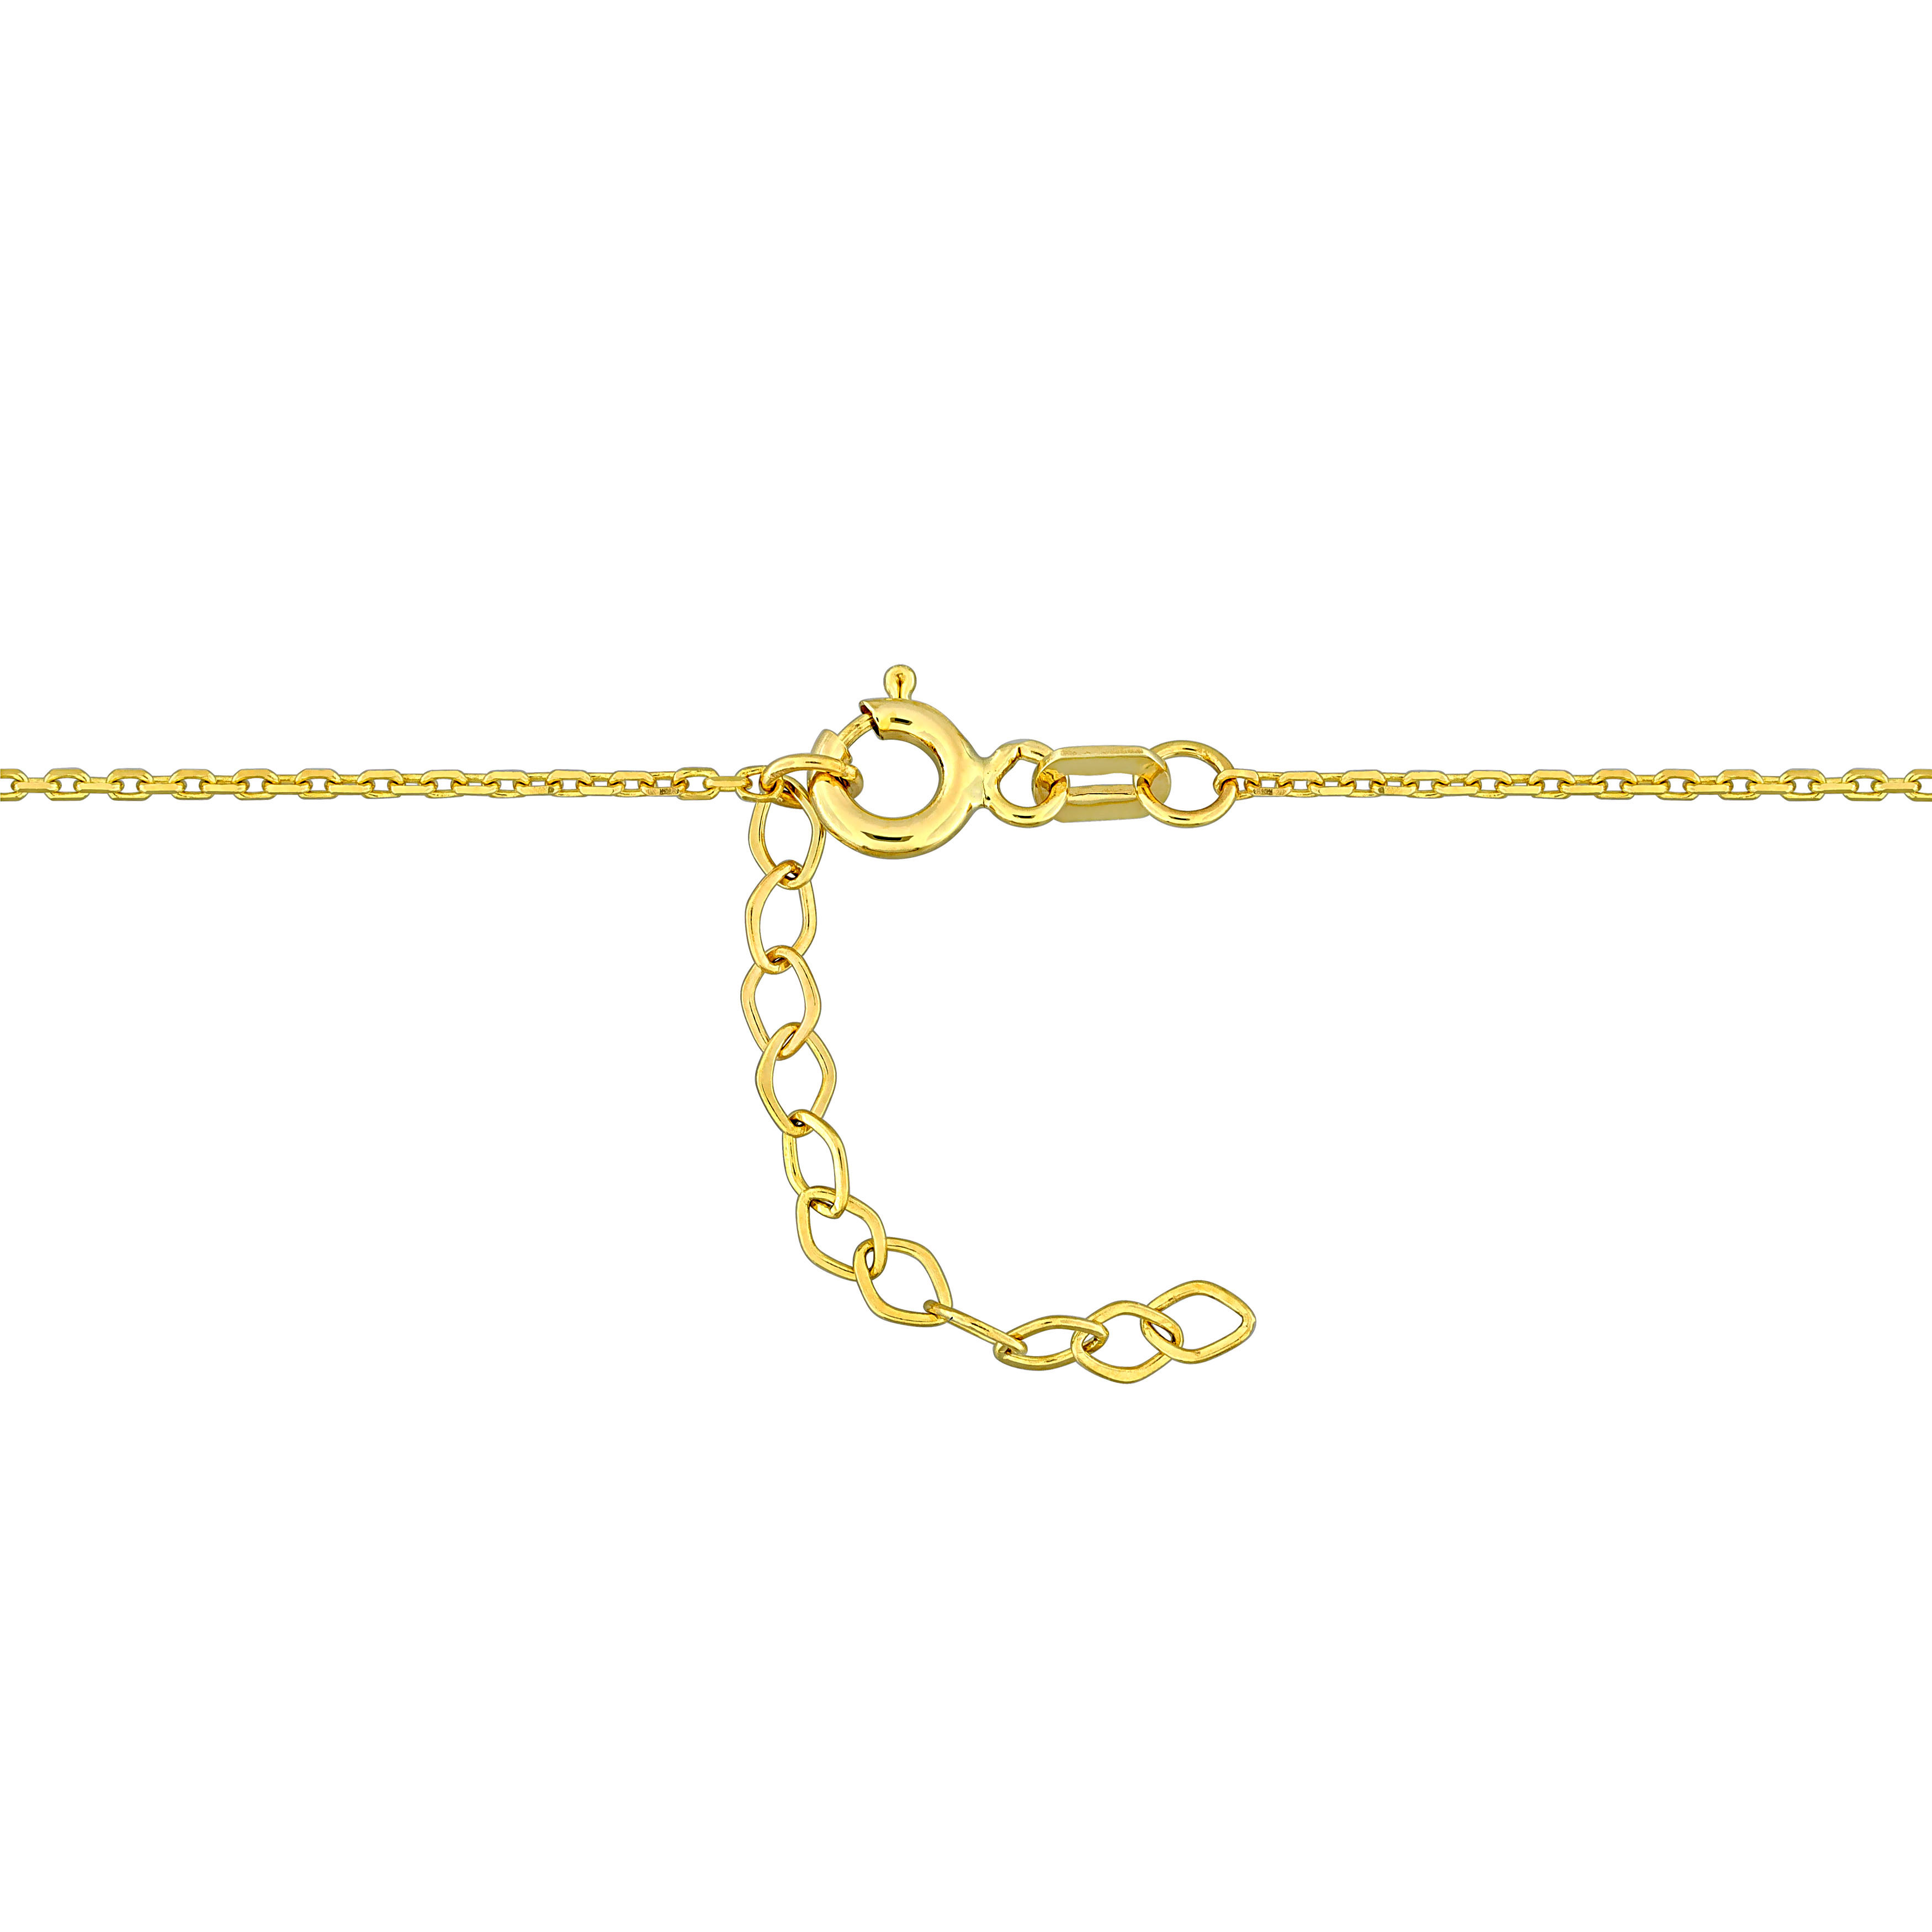 1/2 CT TGW Multi-Gemstone & Diamond Accent Bar Necklace in 10k Yellow Gold - 16.5 in